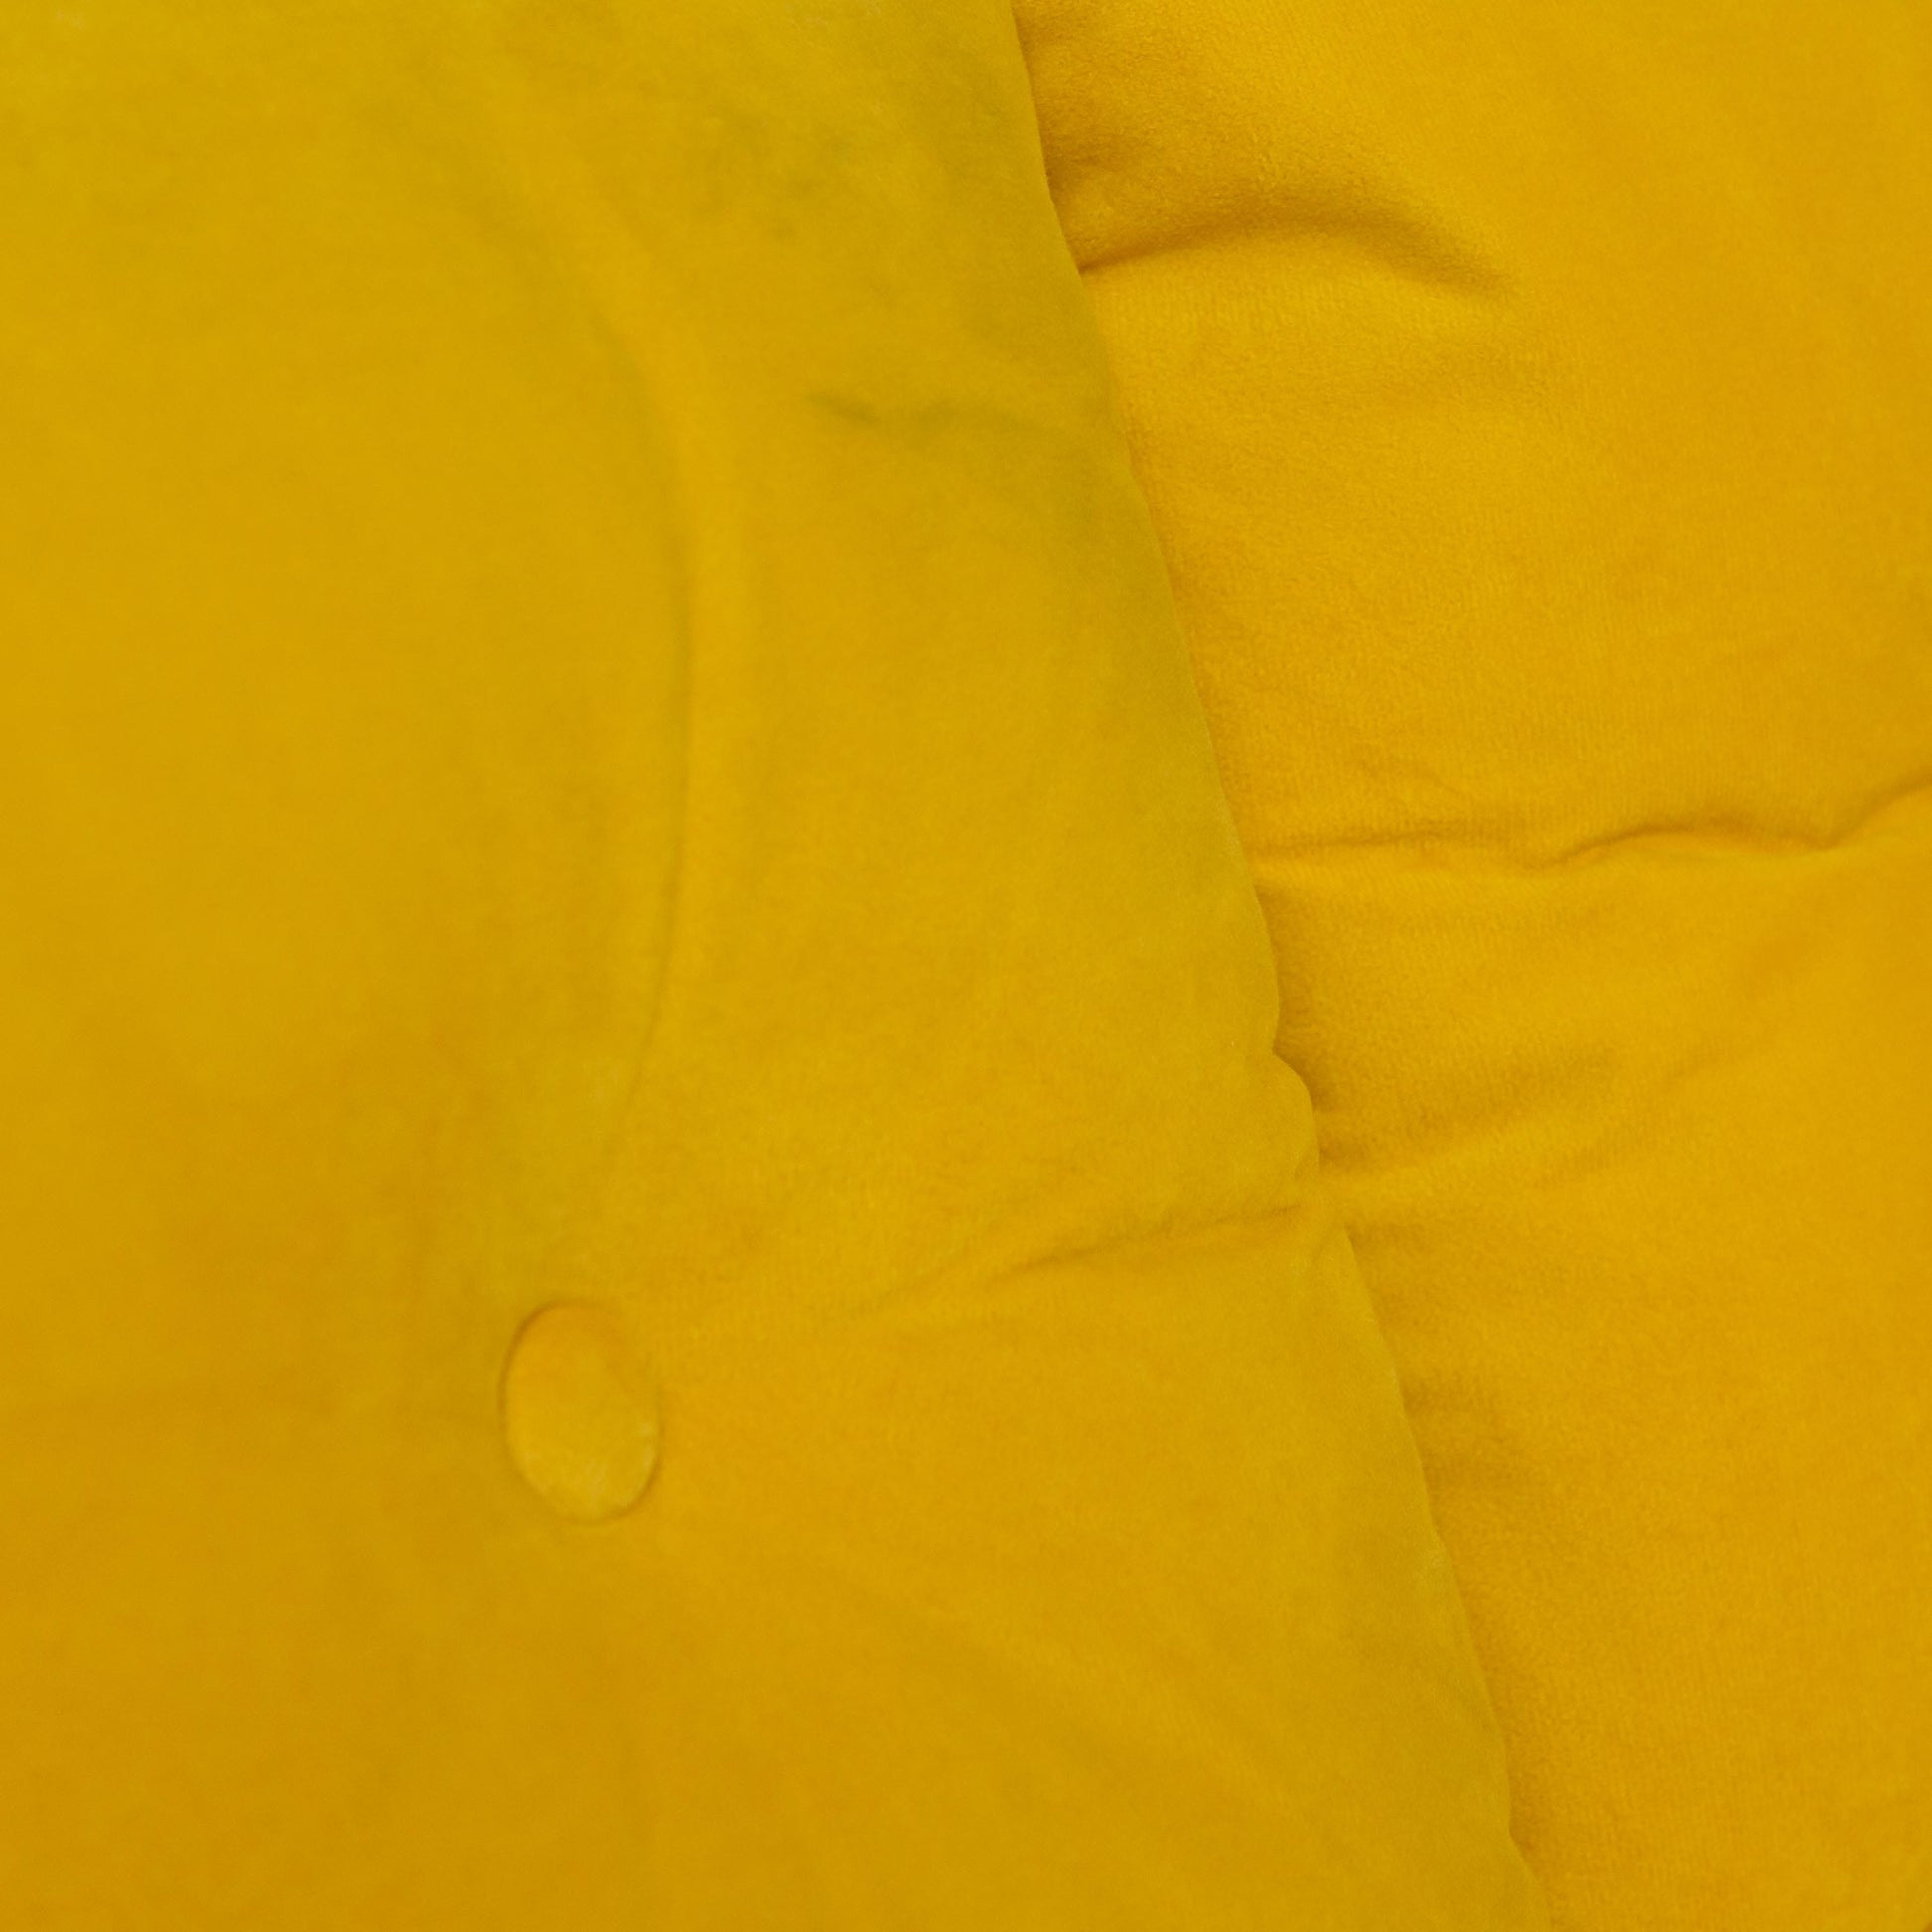 Una double sofa bed - yellow - Laura James